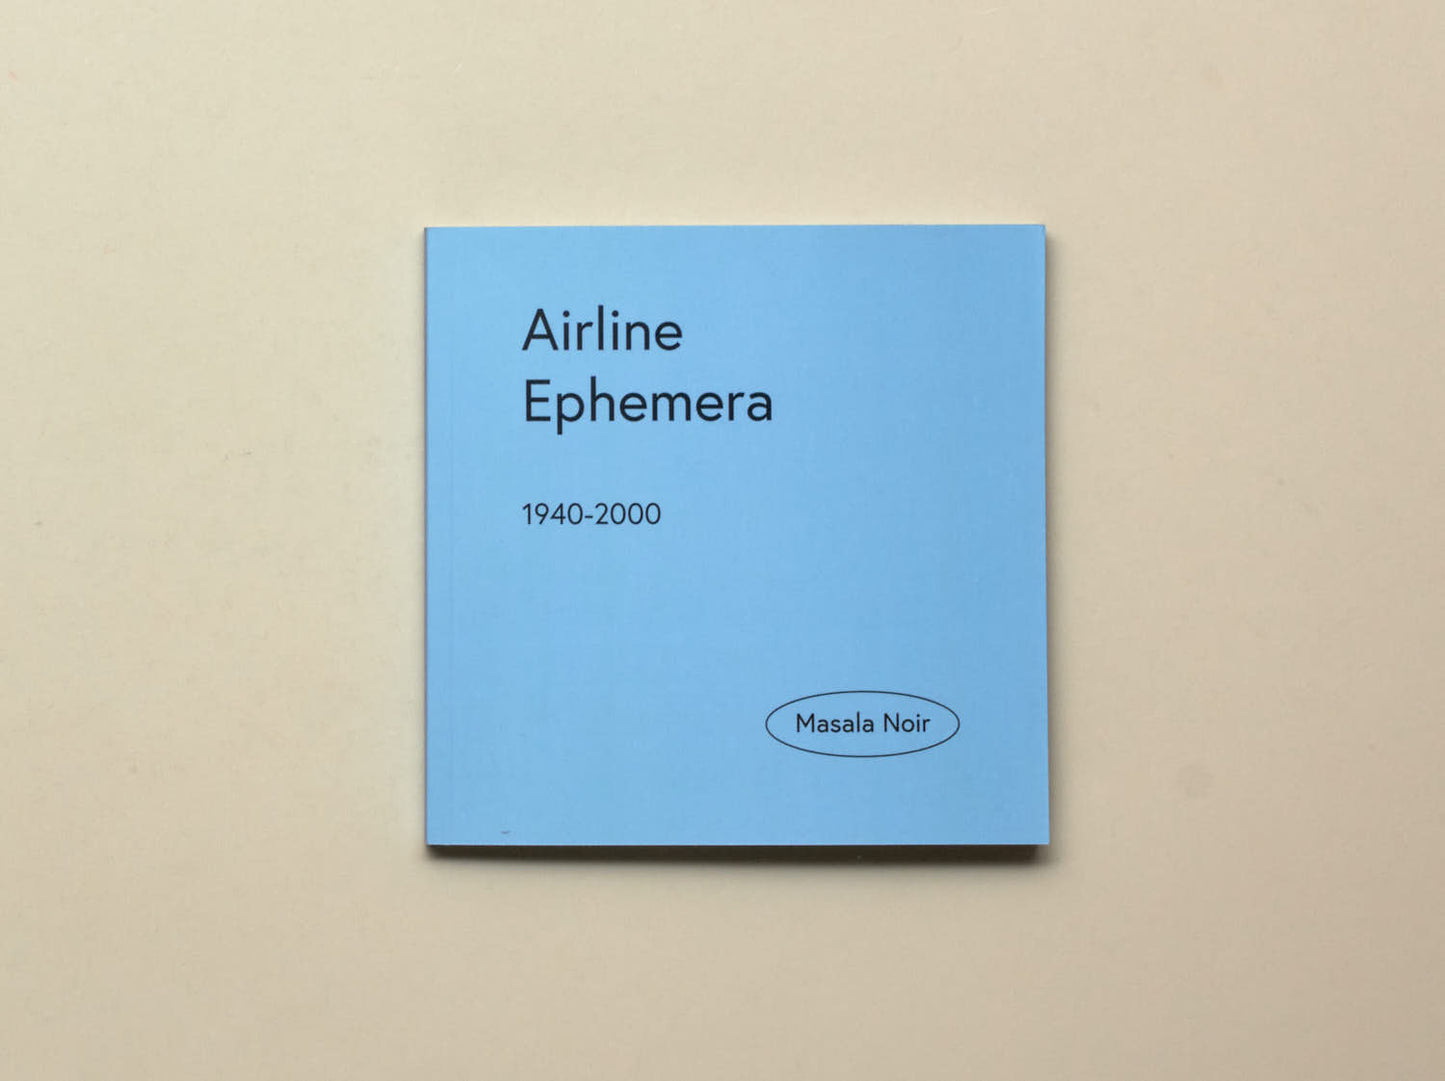 Airlines Ephemeras 1950 - 2000